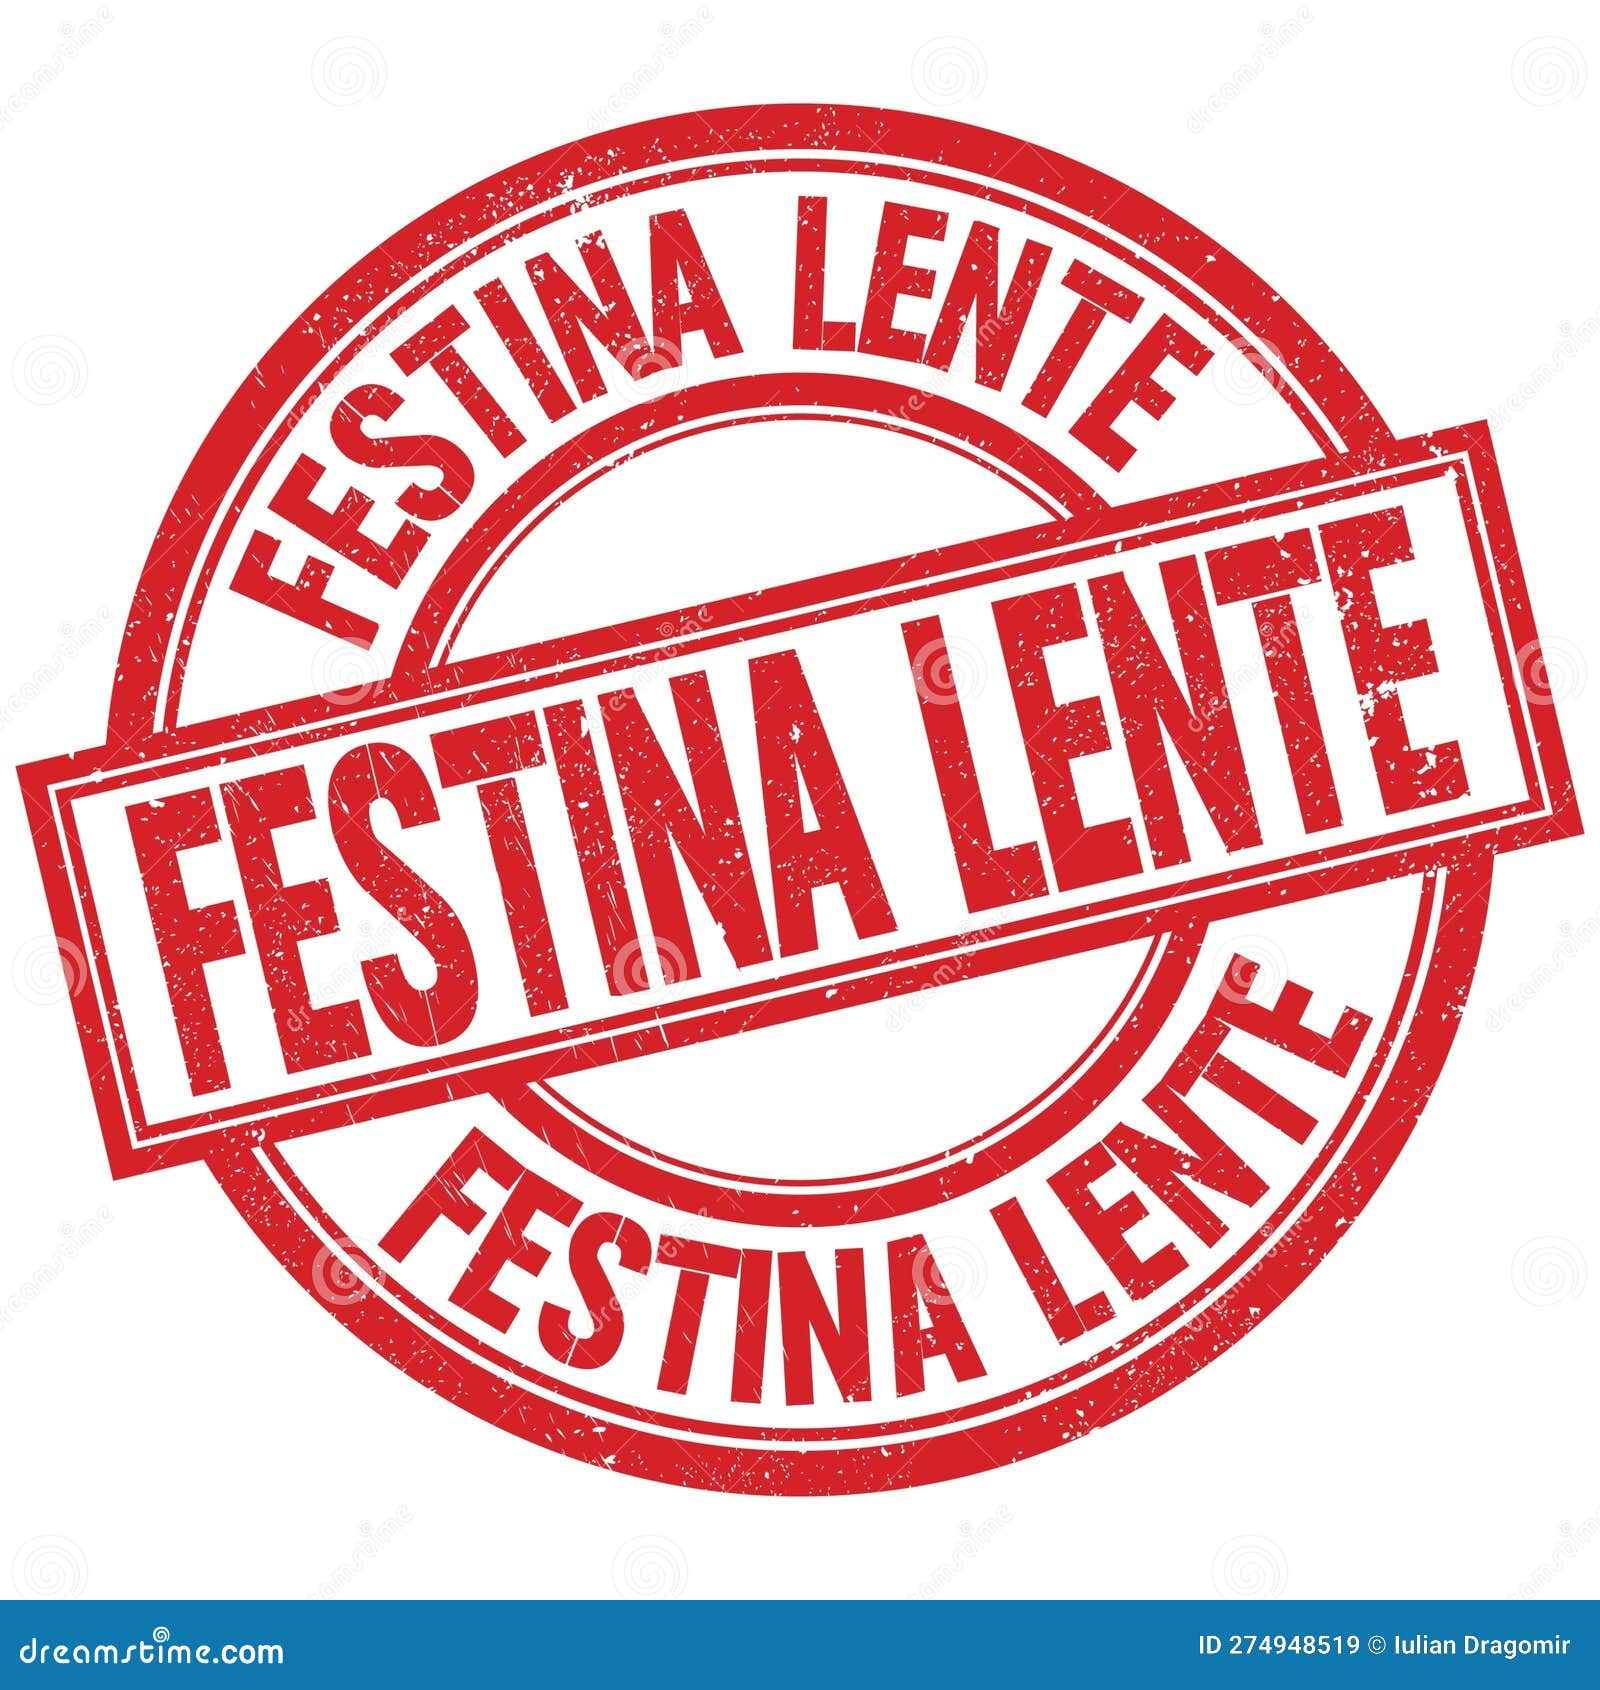 festina lente written word on red stamp sign